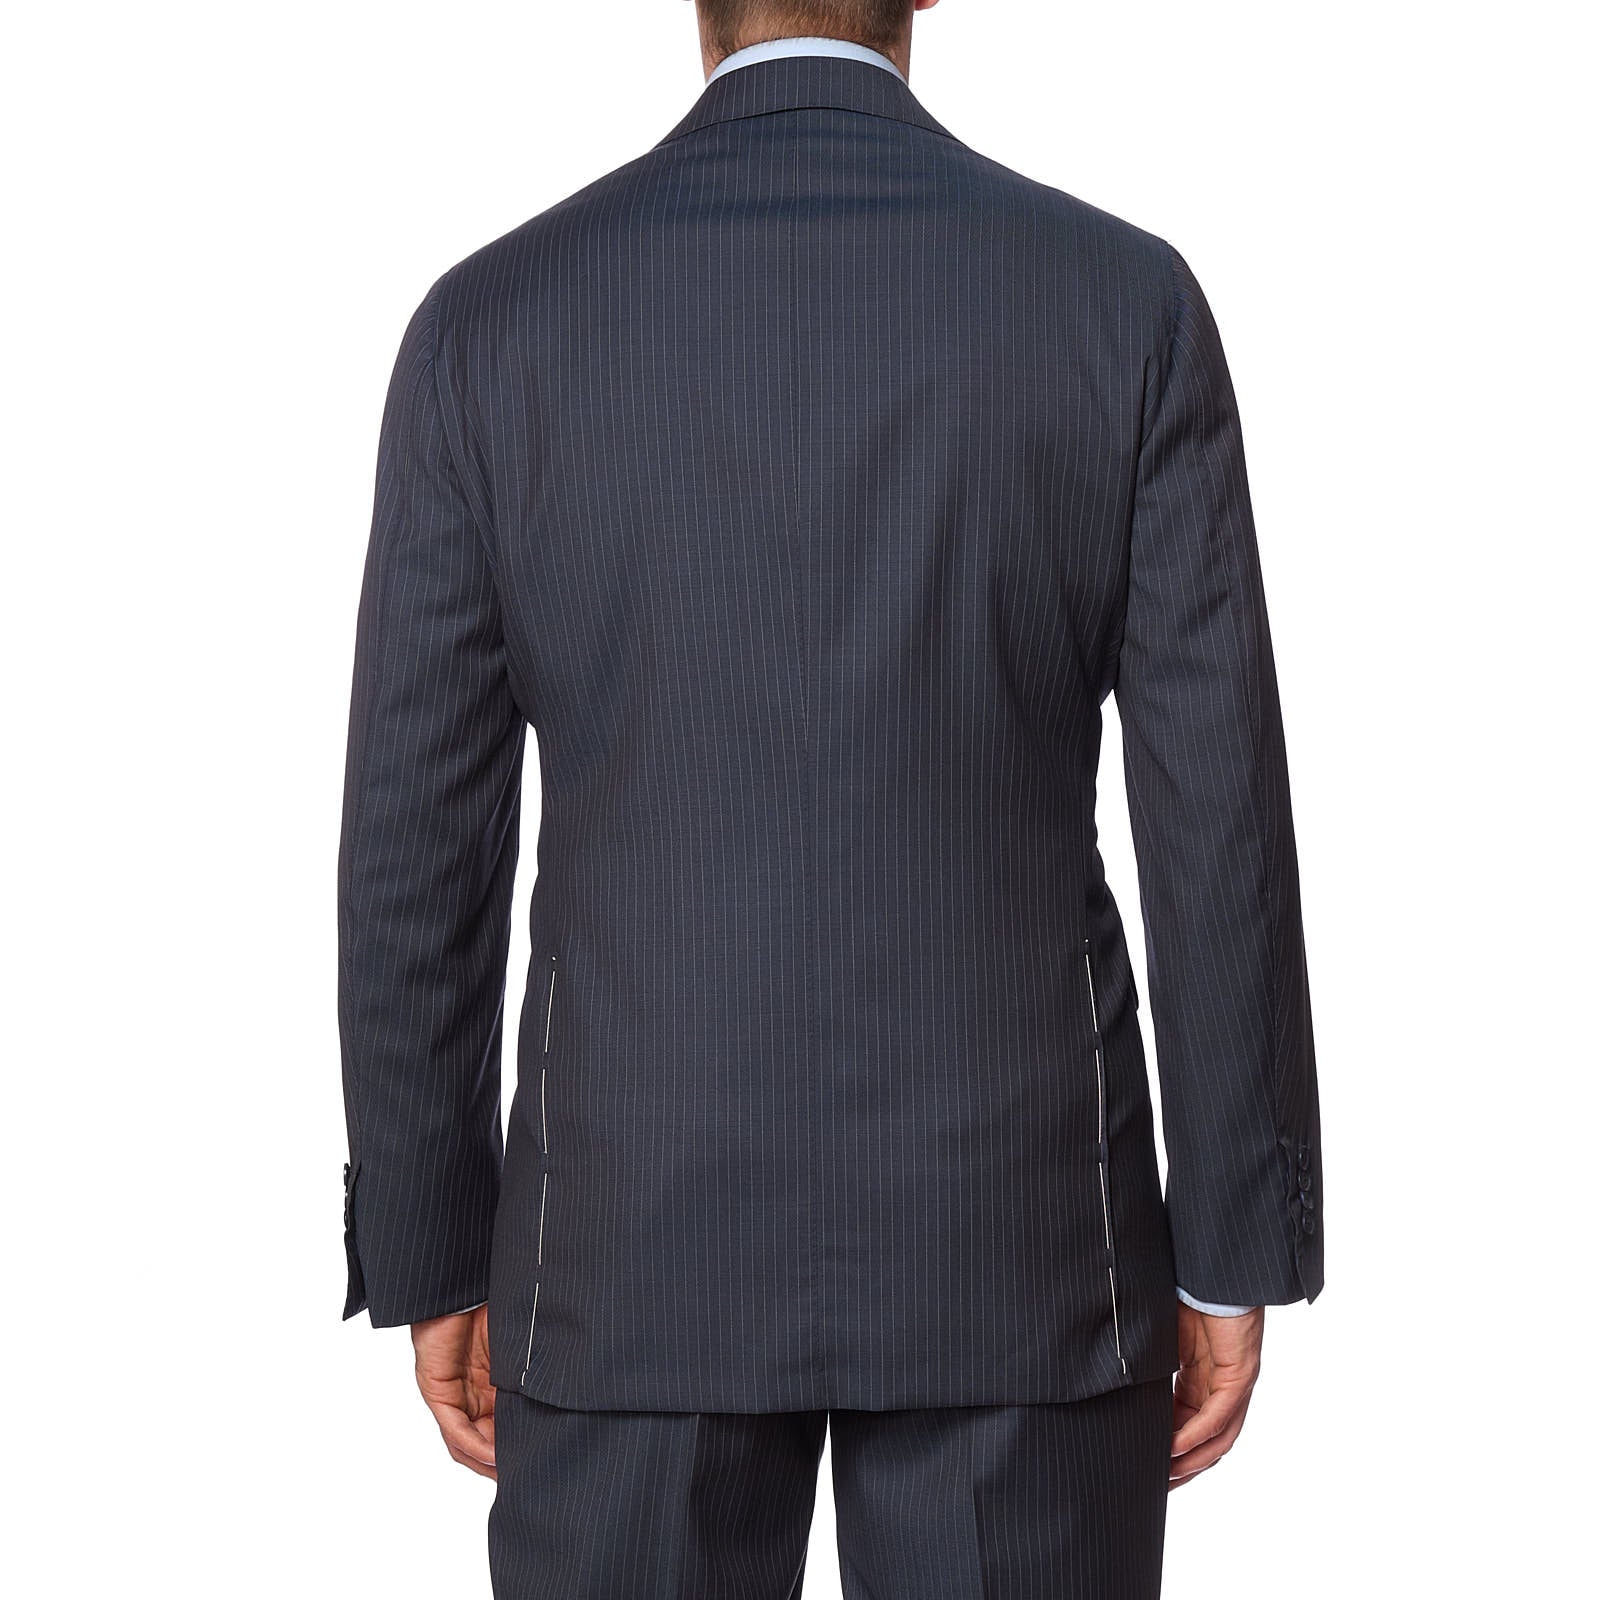 SARTORIA PARTENOPEA for VANNUCCI Blue Striped Wool Handmade Suit EU 52 NEW US 42